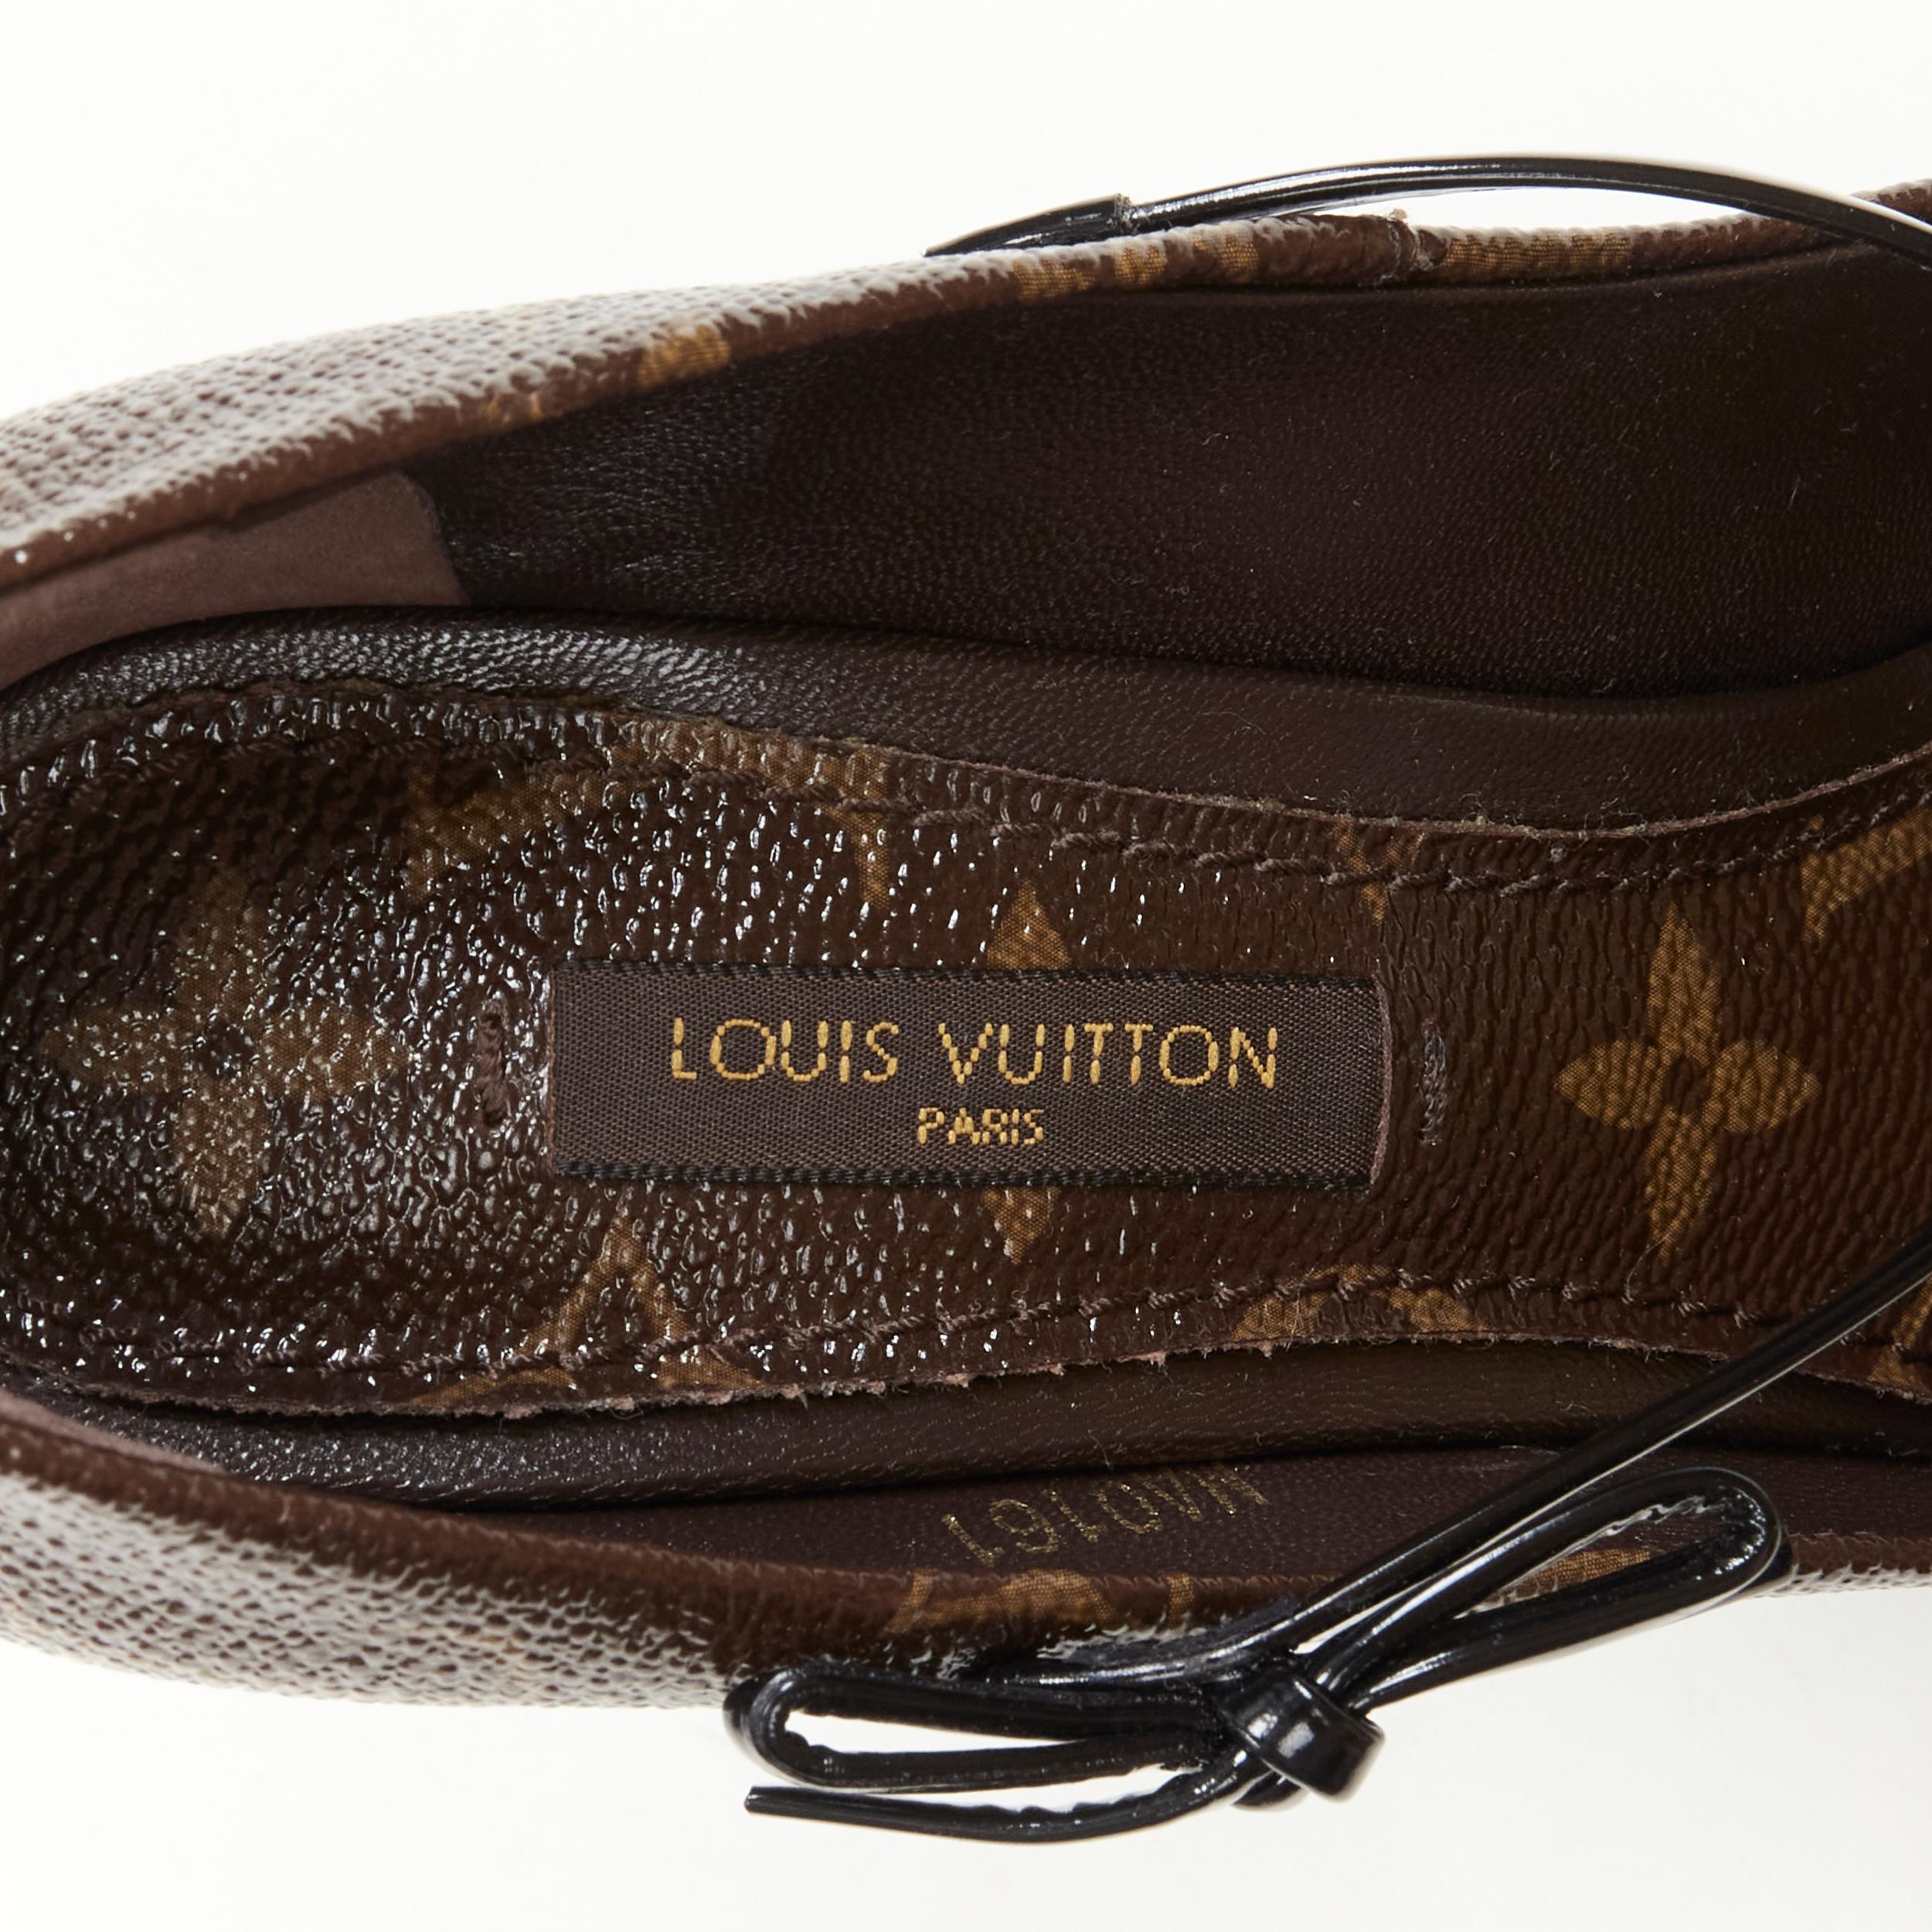 LOUIS VUITTON brown LV monogram bow maryjane chunky heel pump EU36.5 1